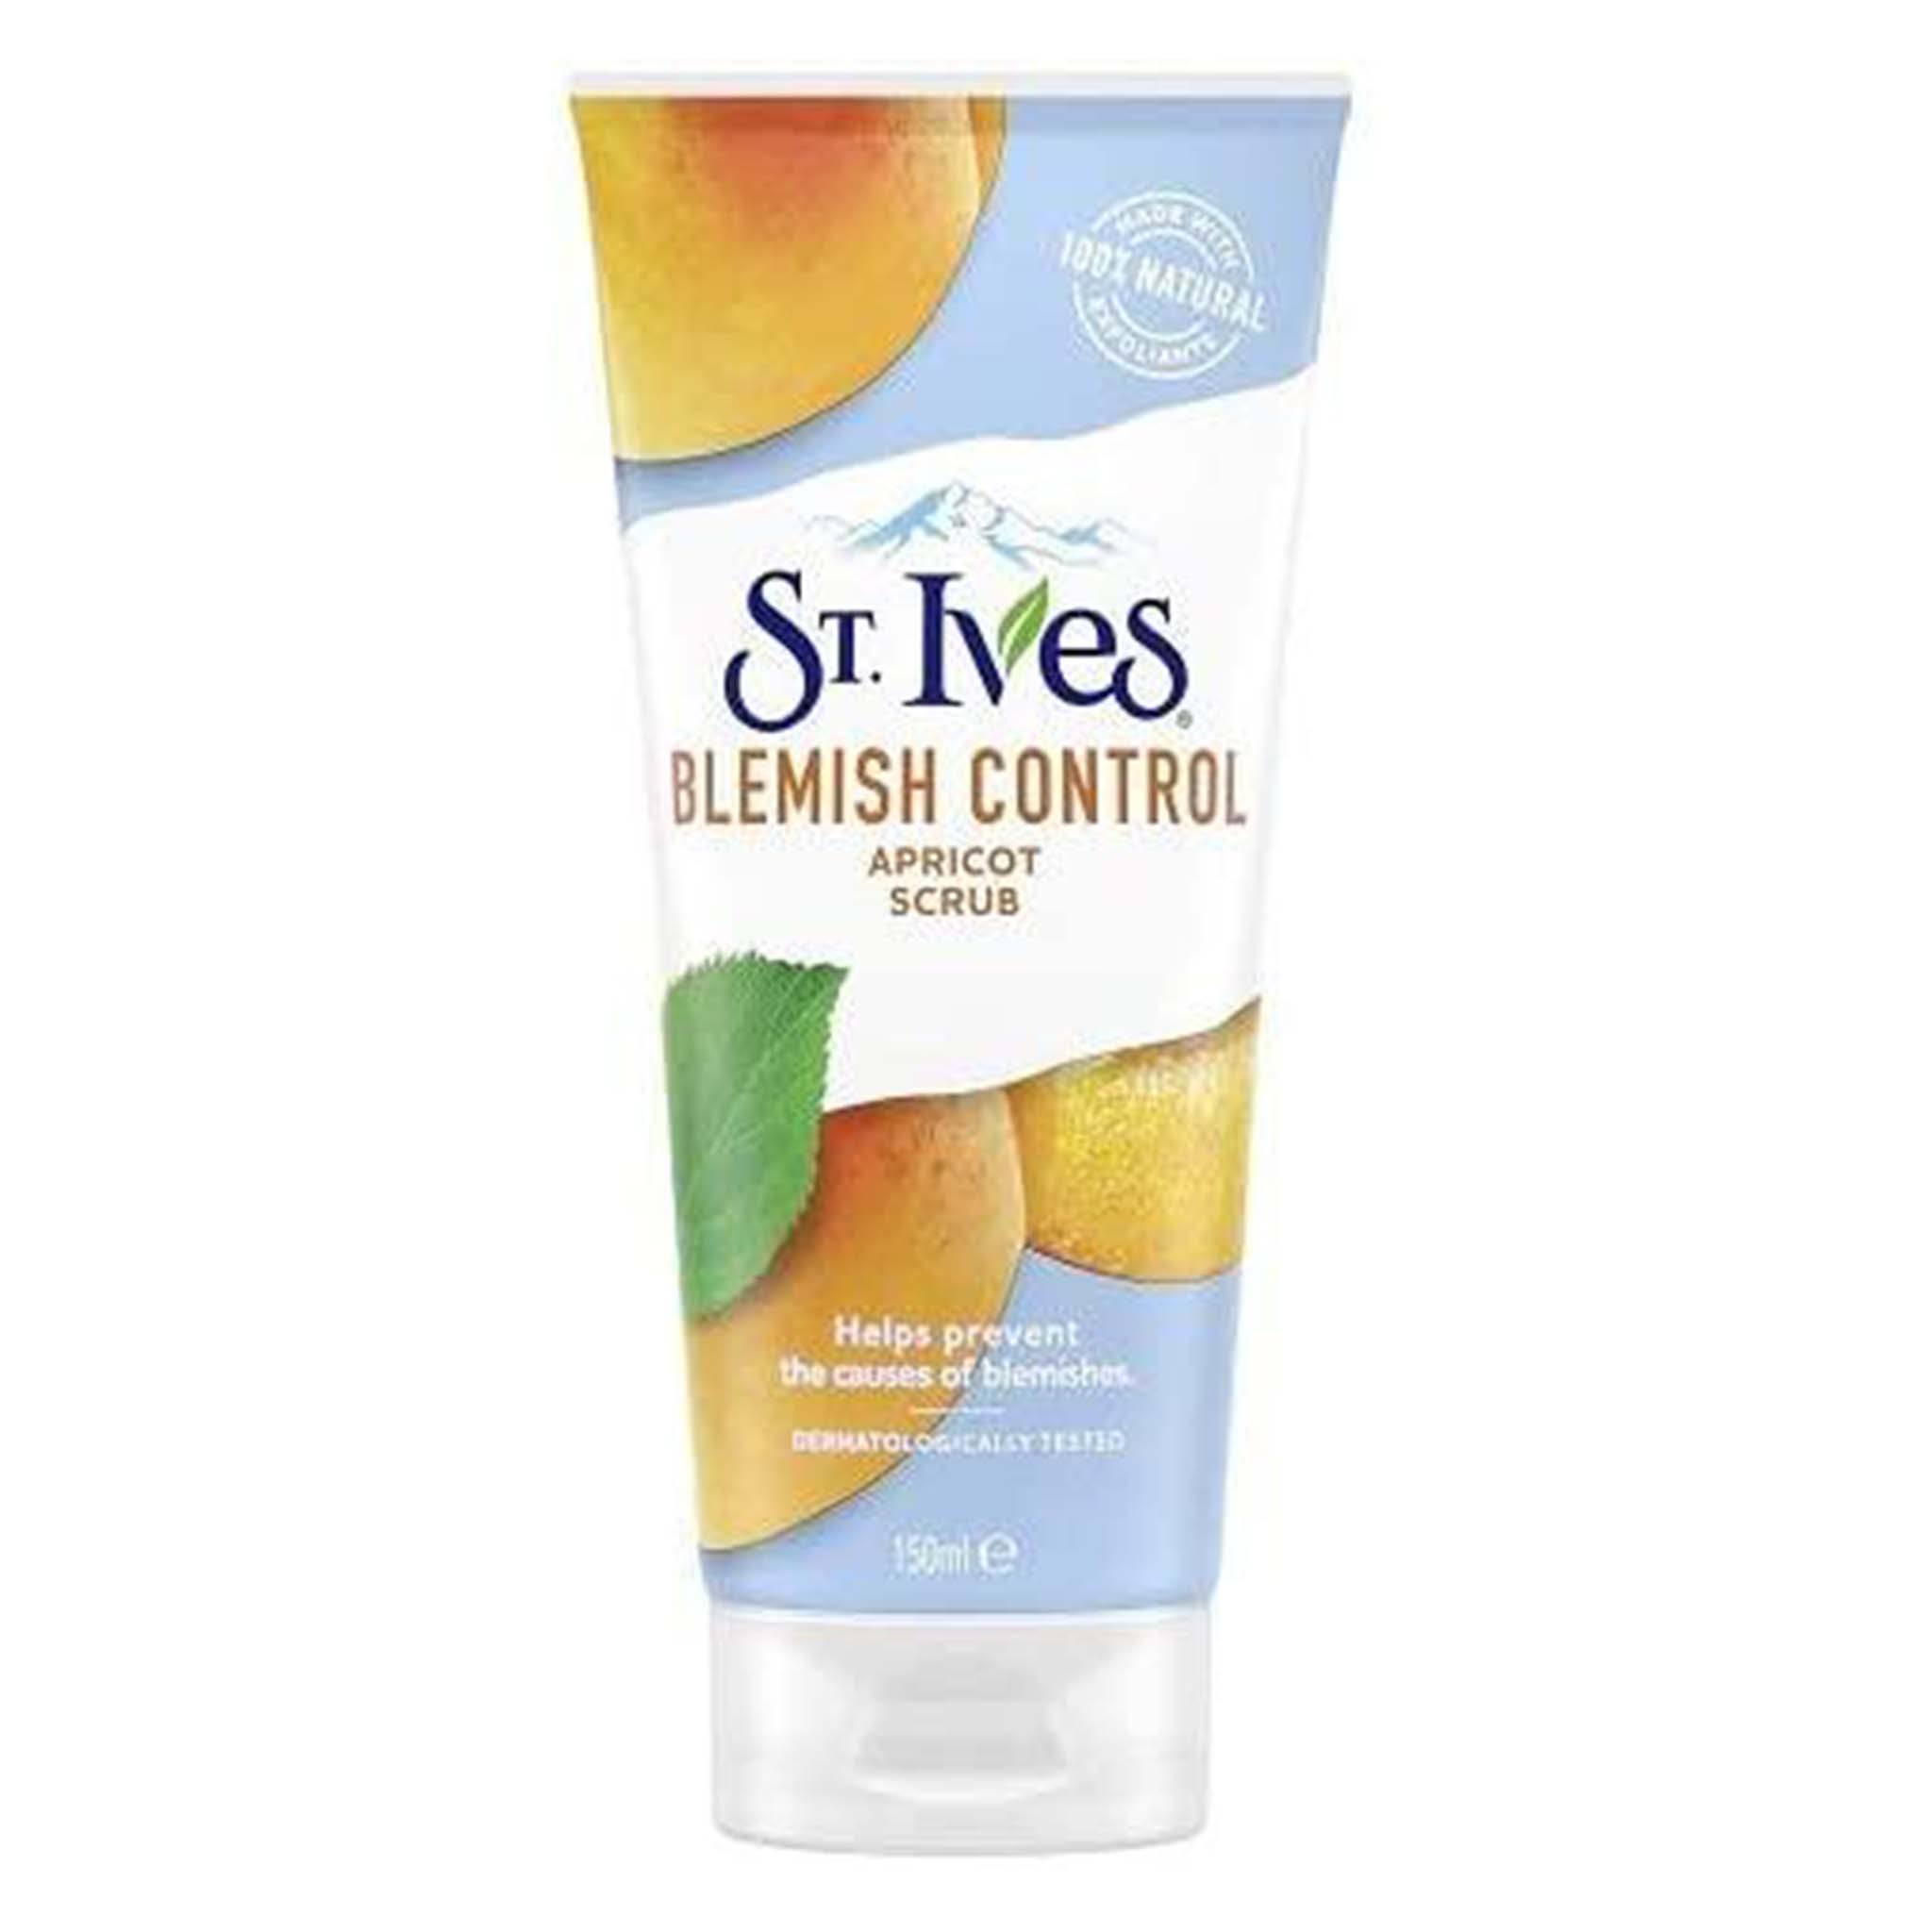 St Ives Blemish Control Apricot Face Scrub - 150ml